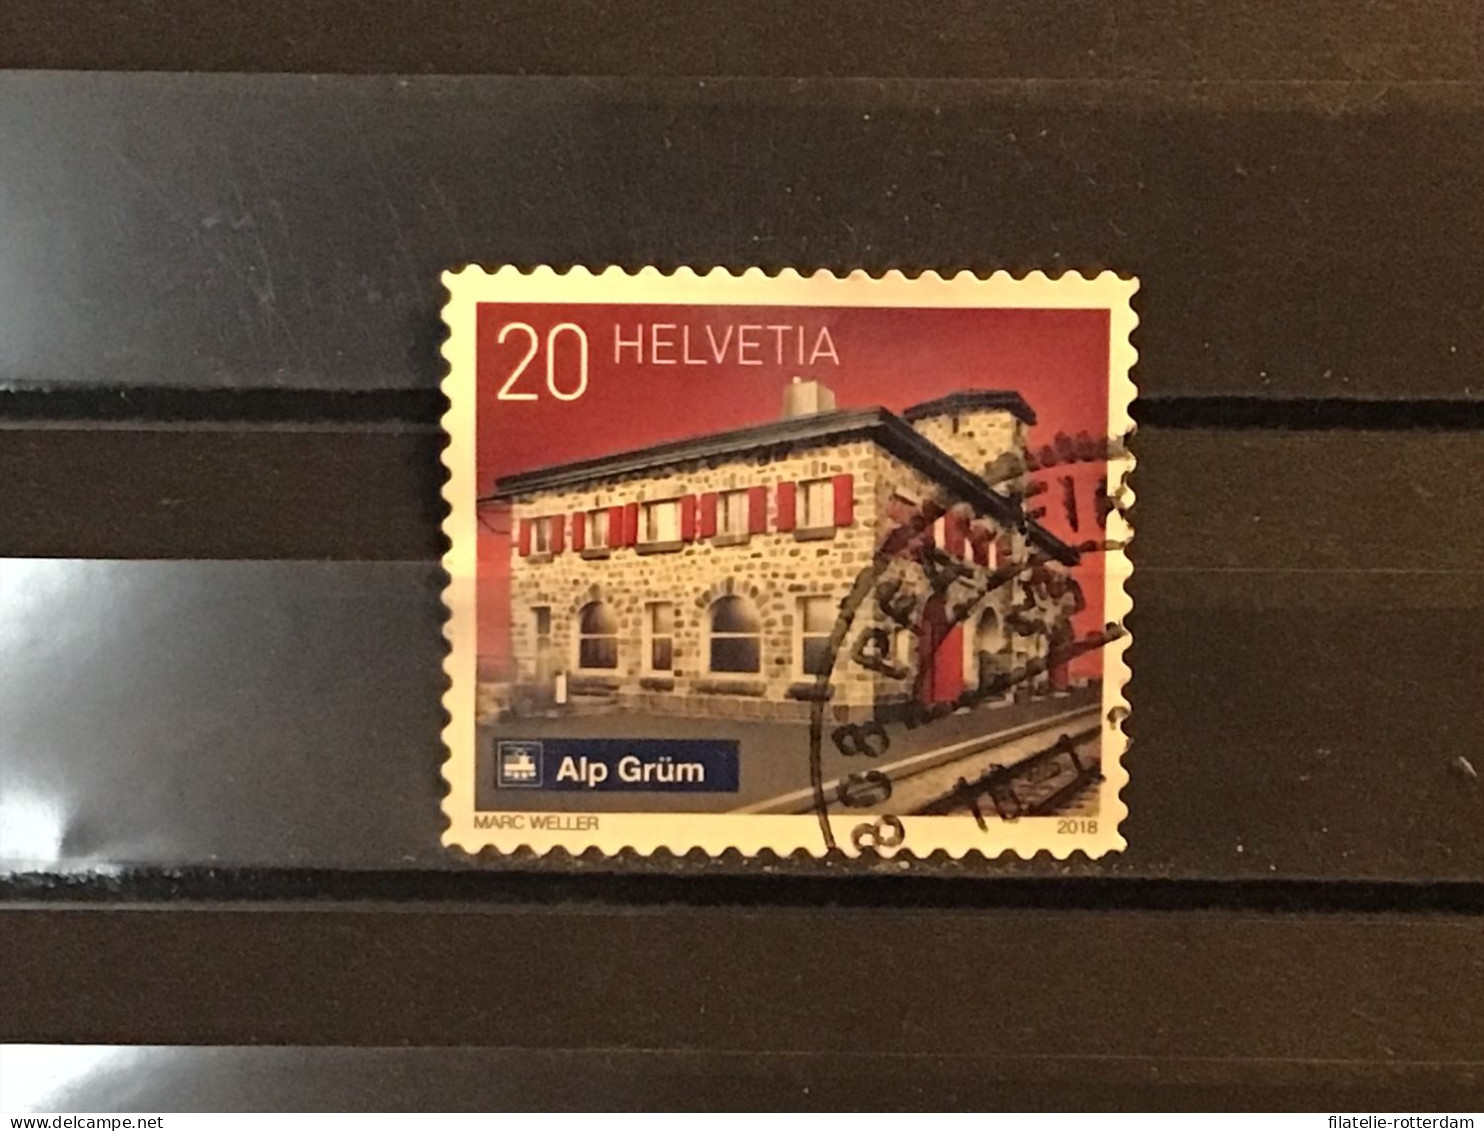 Switzerland / Zwitserland - Train Stations (20) 2018 - Used Stamps